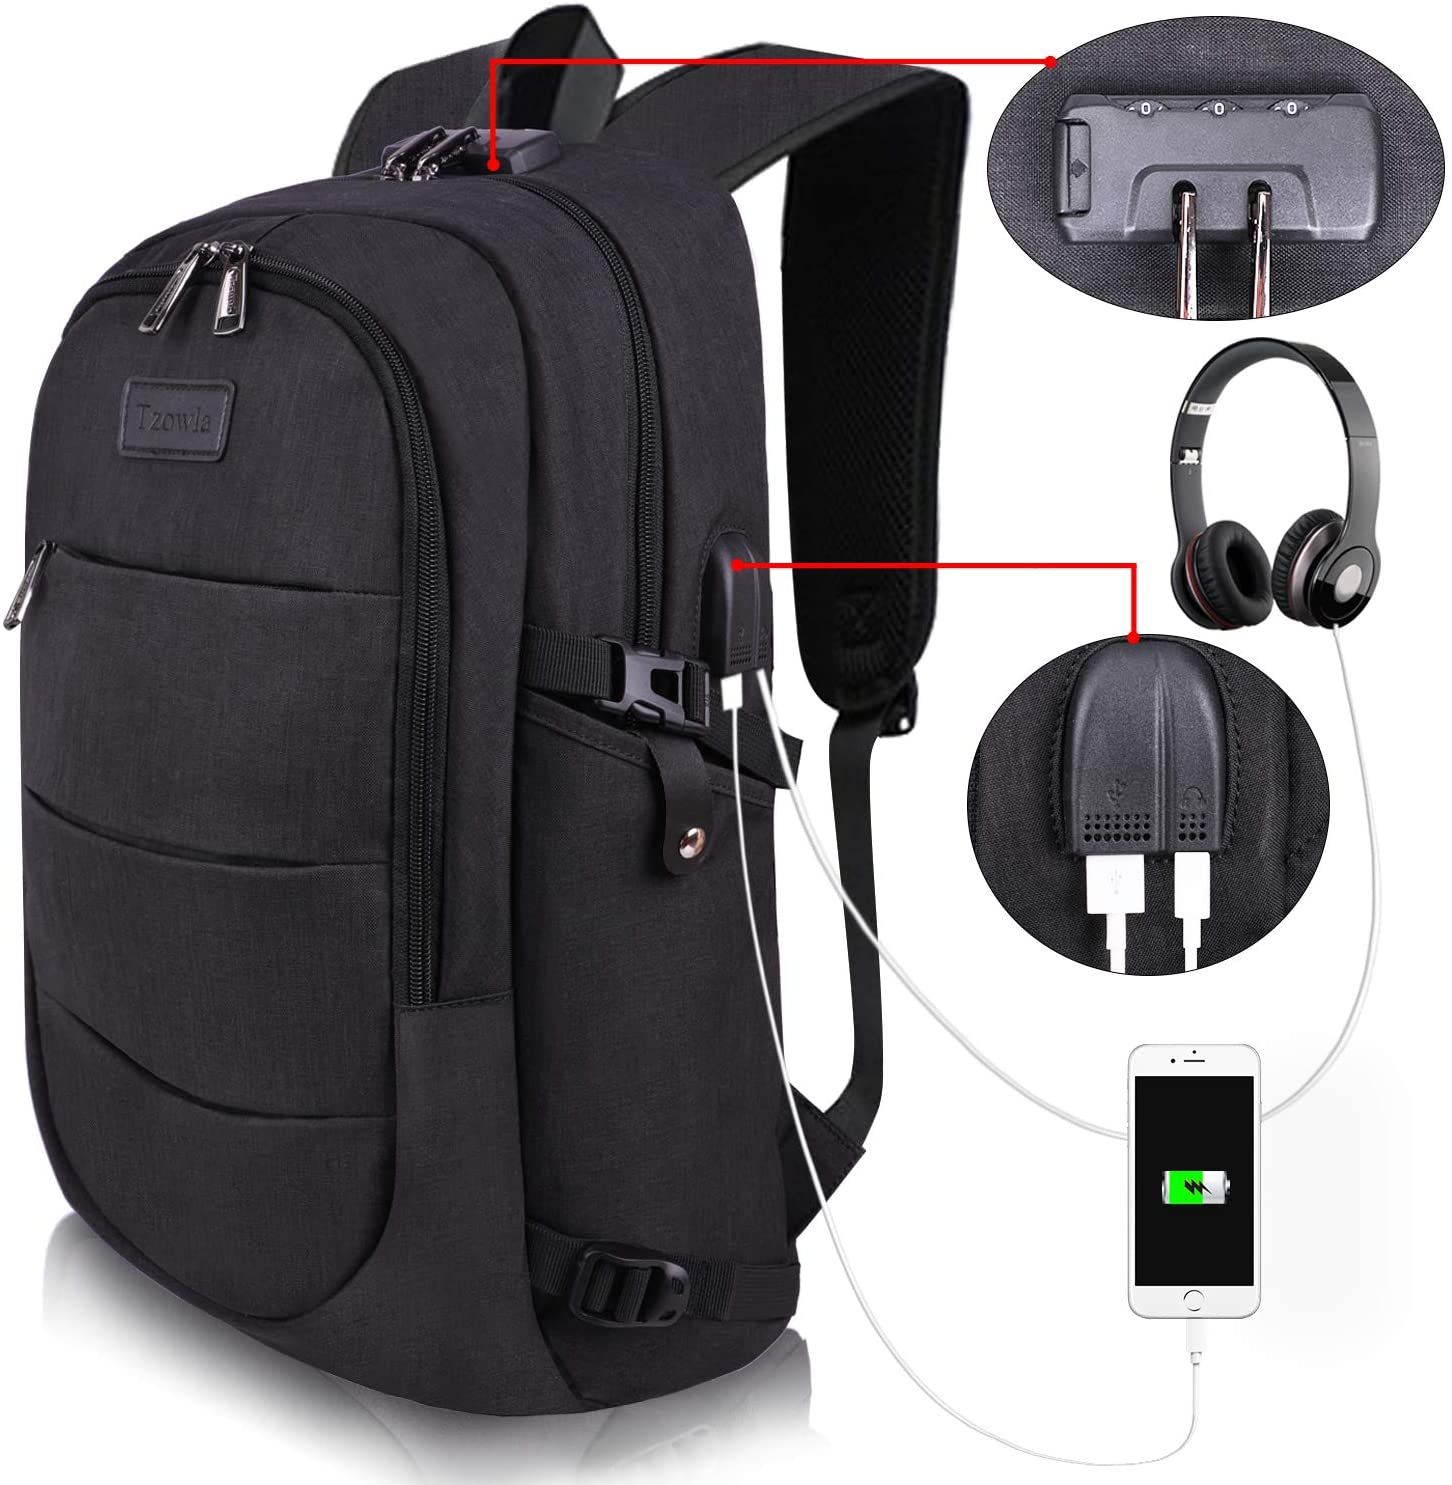 Tzowla Business Laptop Backpack headphones